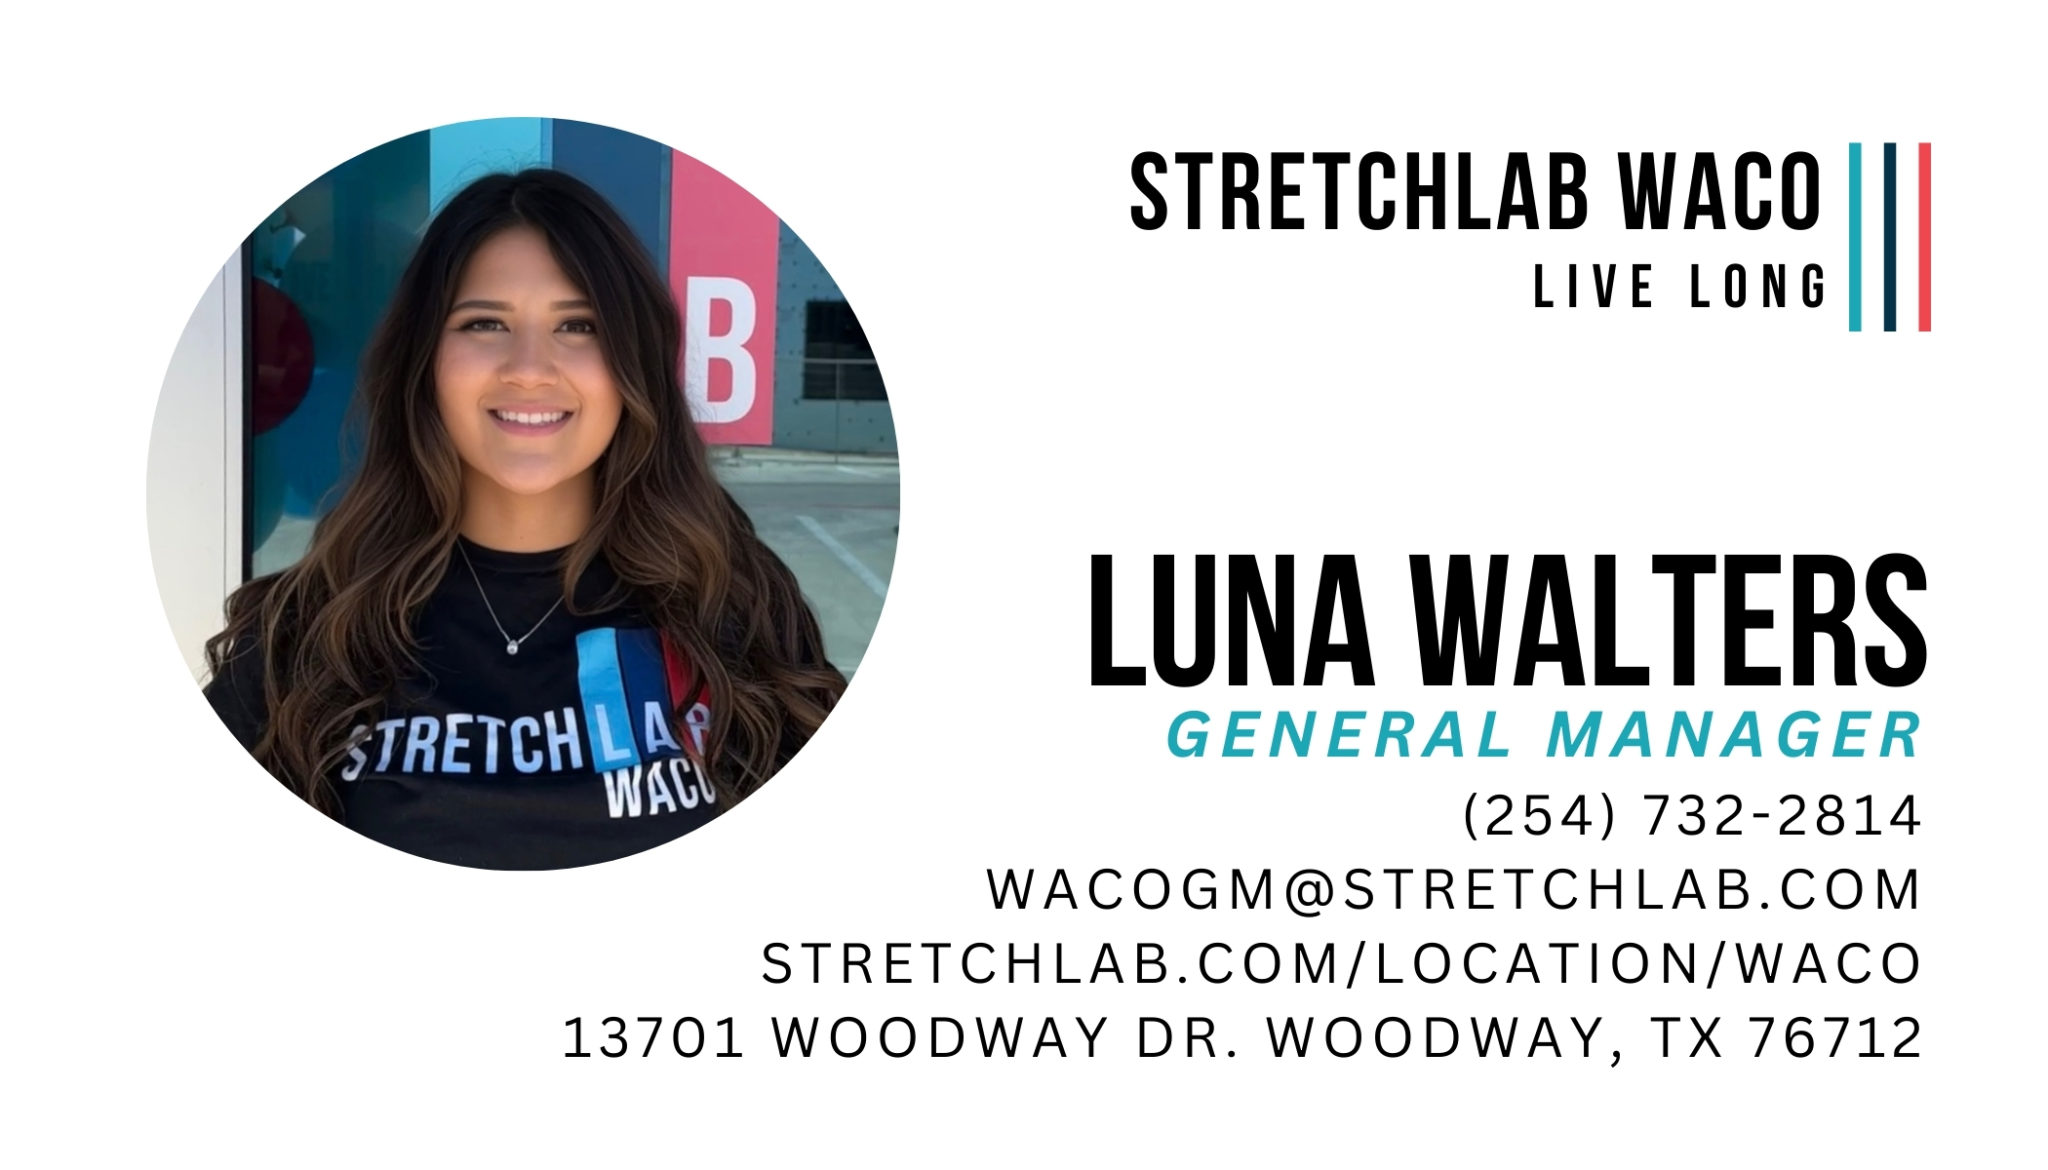 Stretchlab Waco Texas - Luna Walters